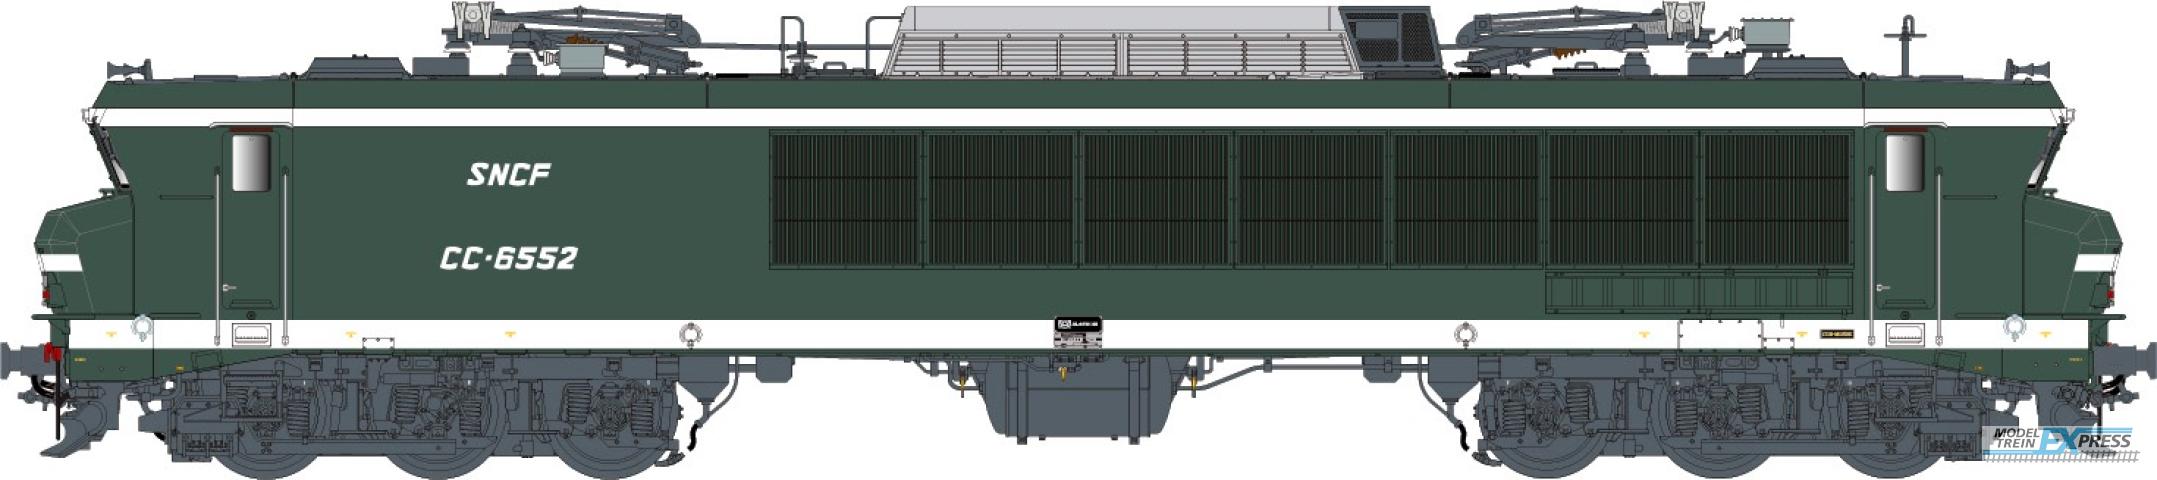 LS Models 10815 CC 6552, Maurienne-livrei, gemoderniseerde buffers, depot Lyon-Mouche / Ep. IV / SNCF / HO / AC / 1 P.